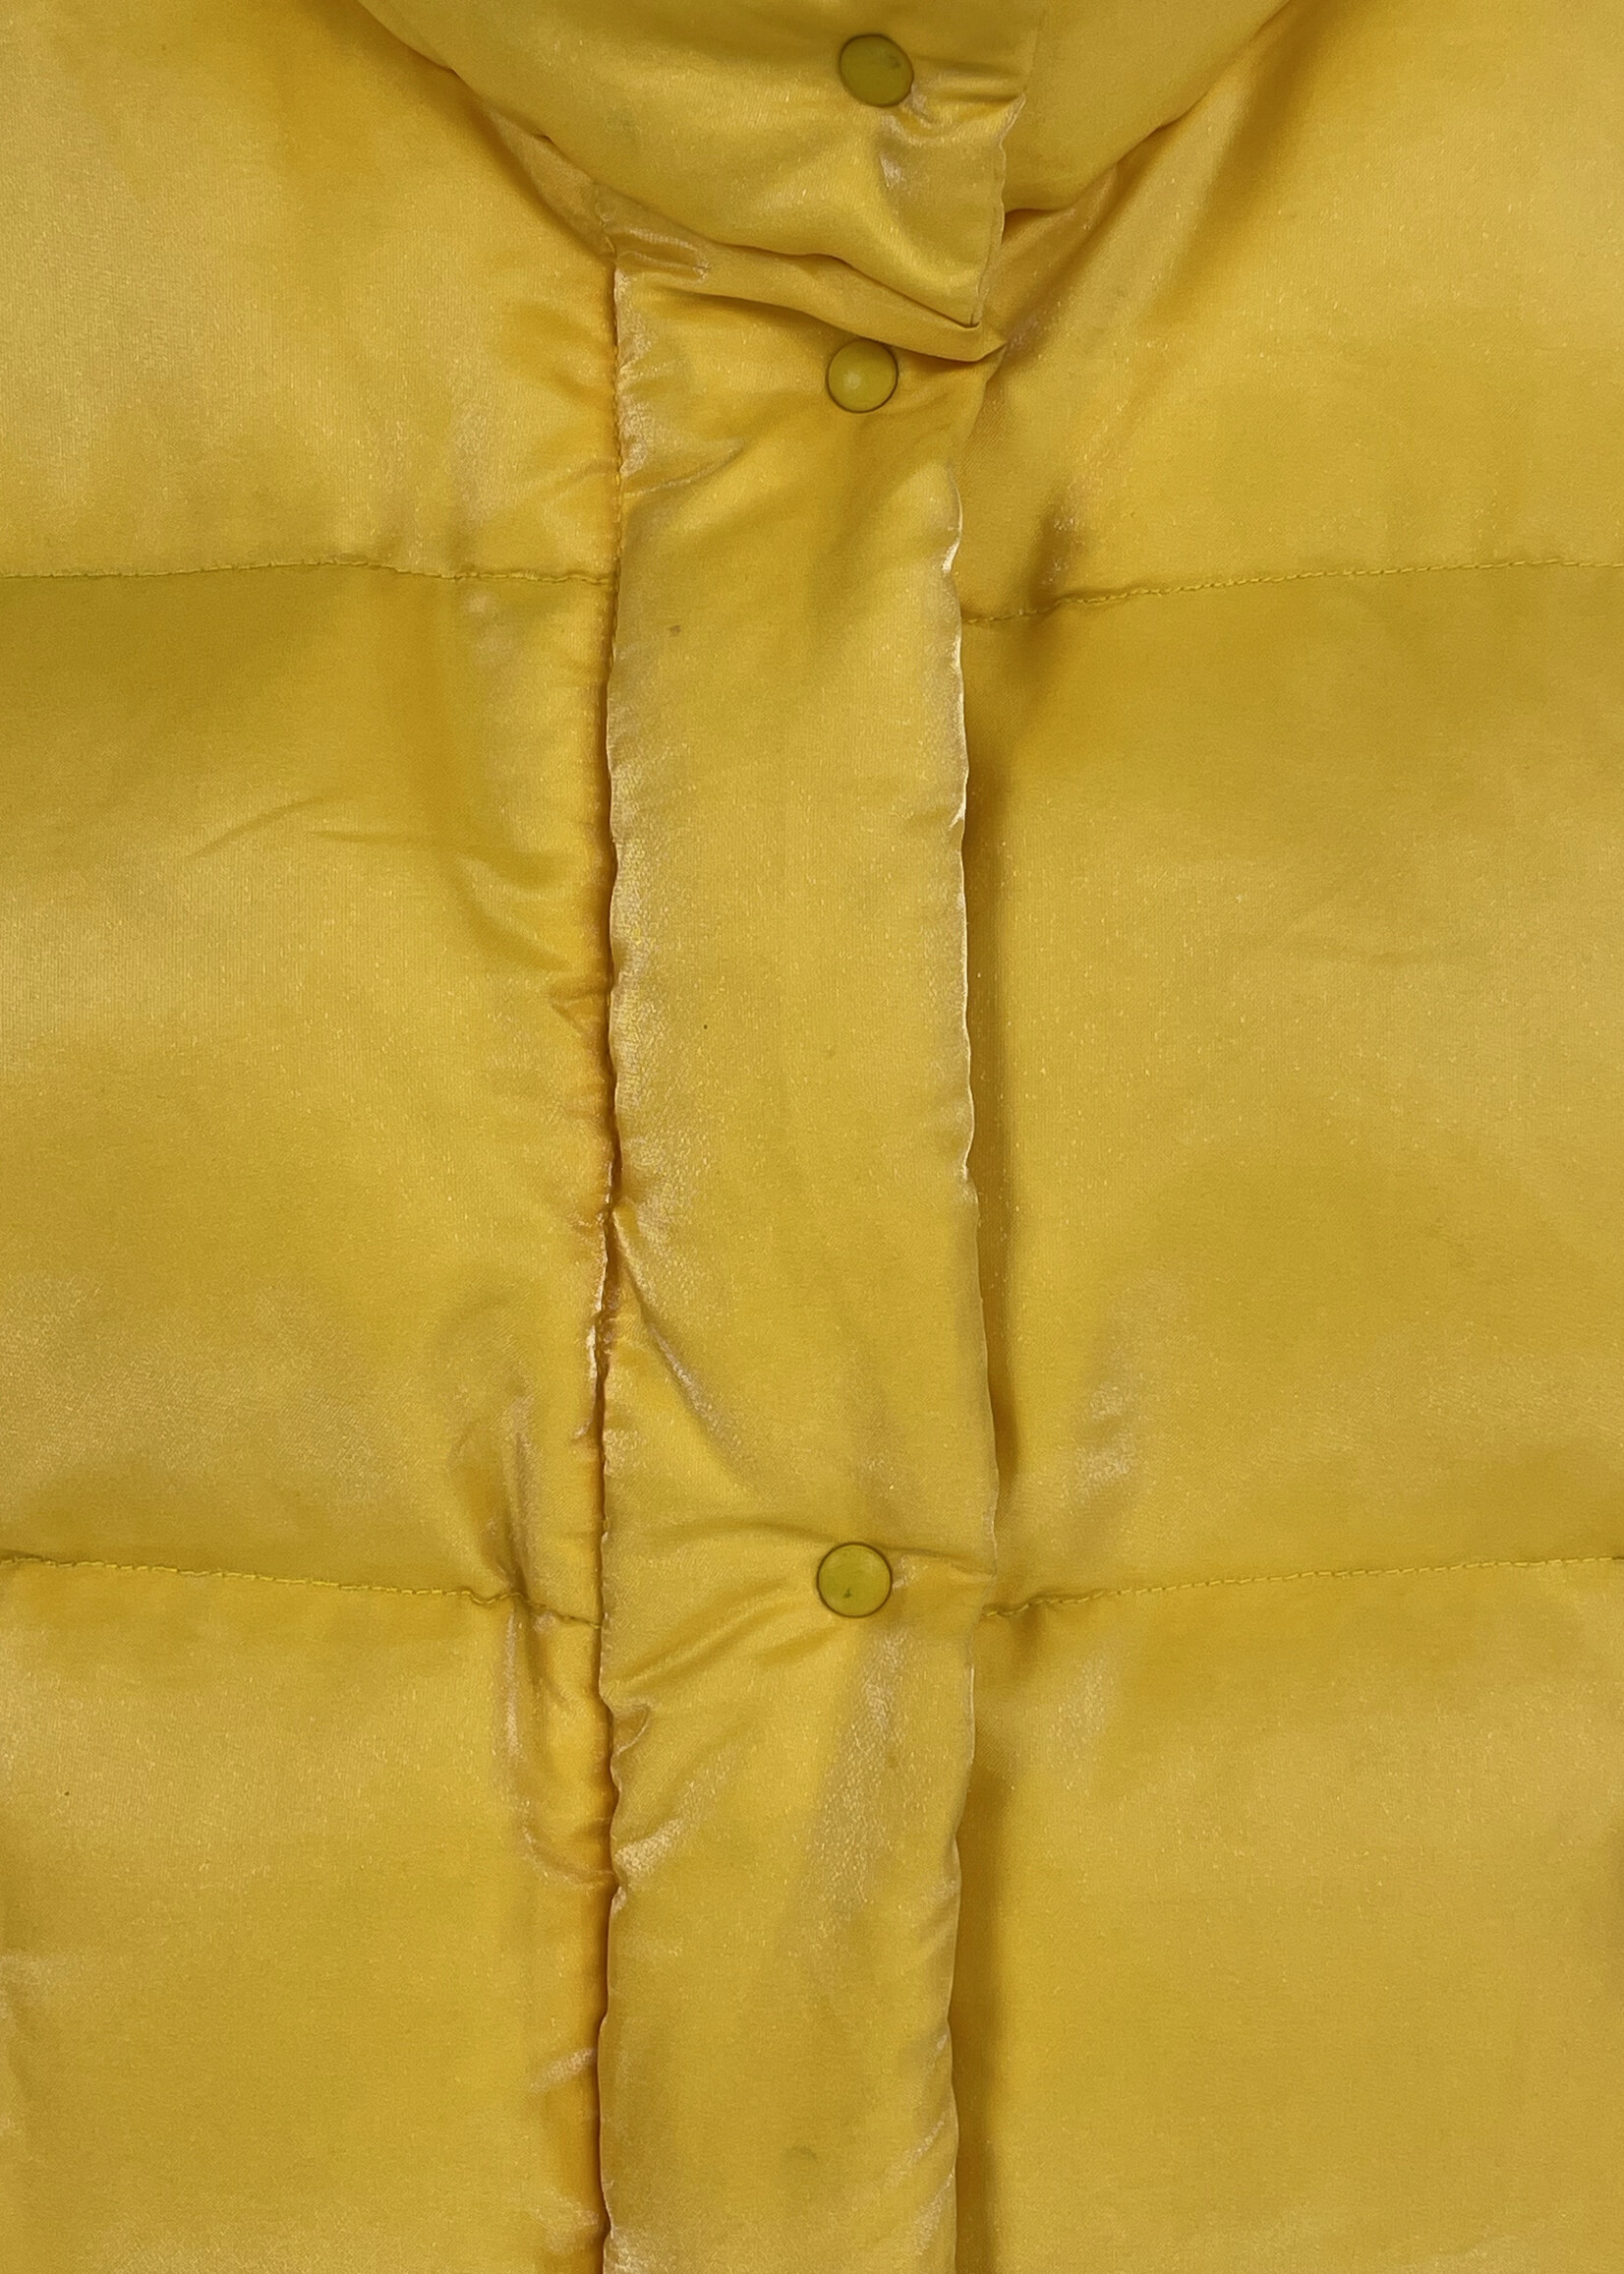 Moncler 90s yellow shiny puffer jacket